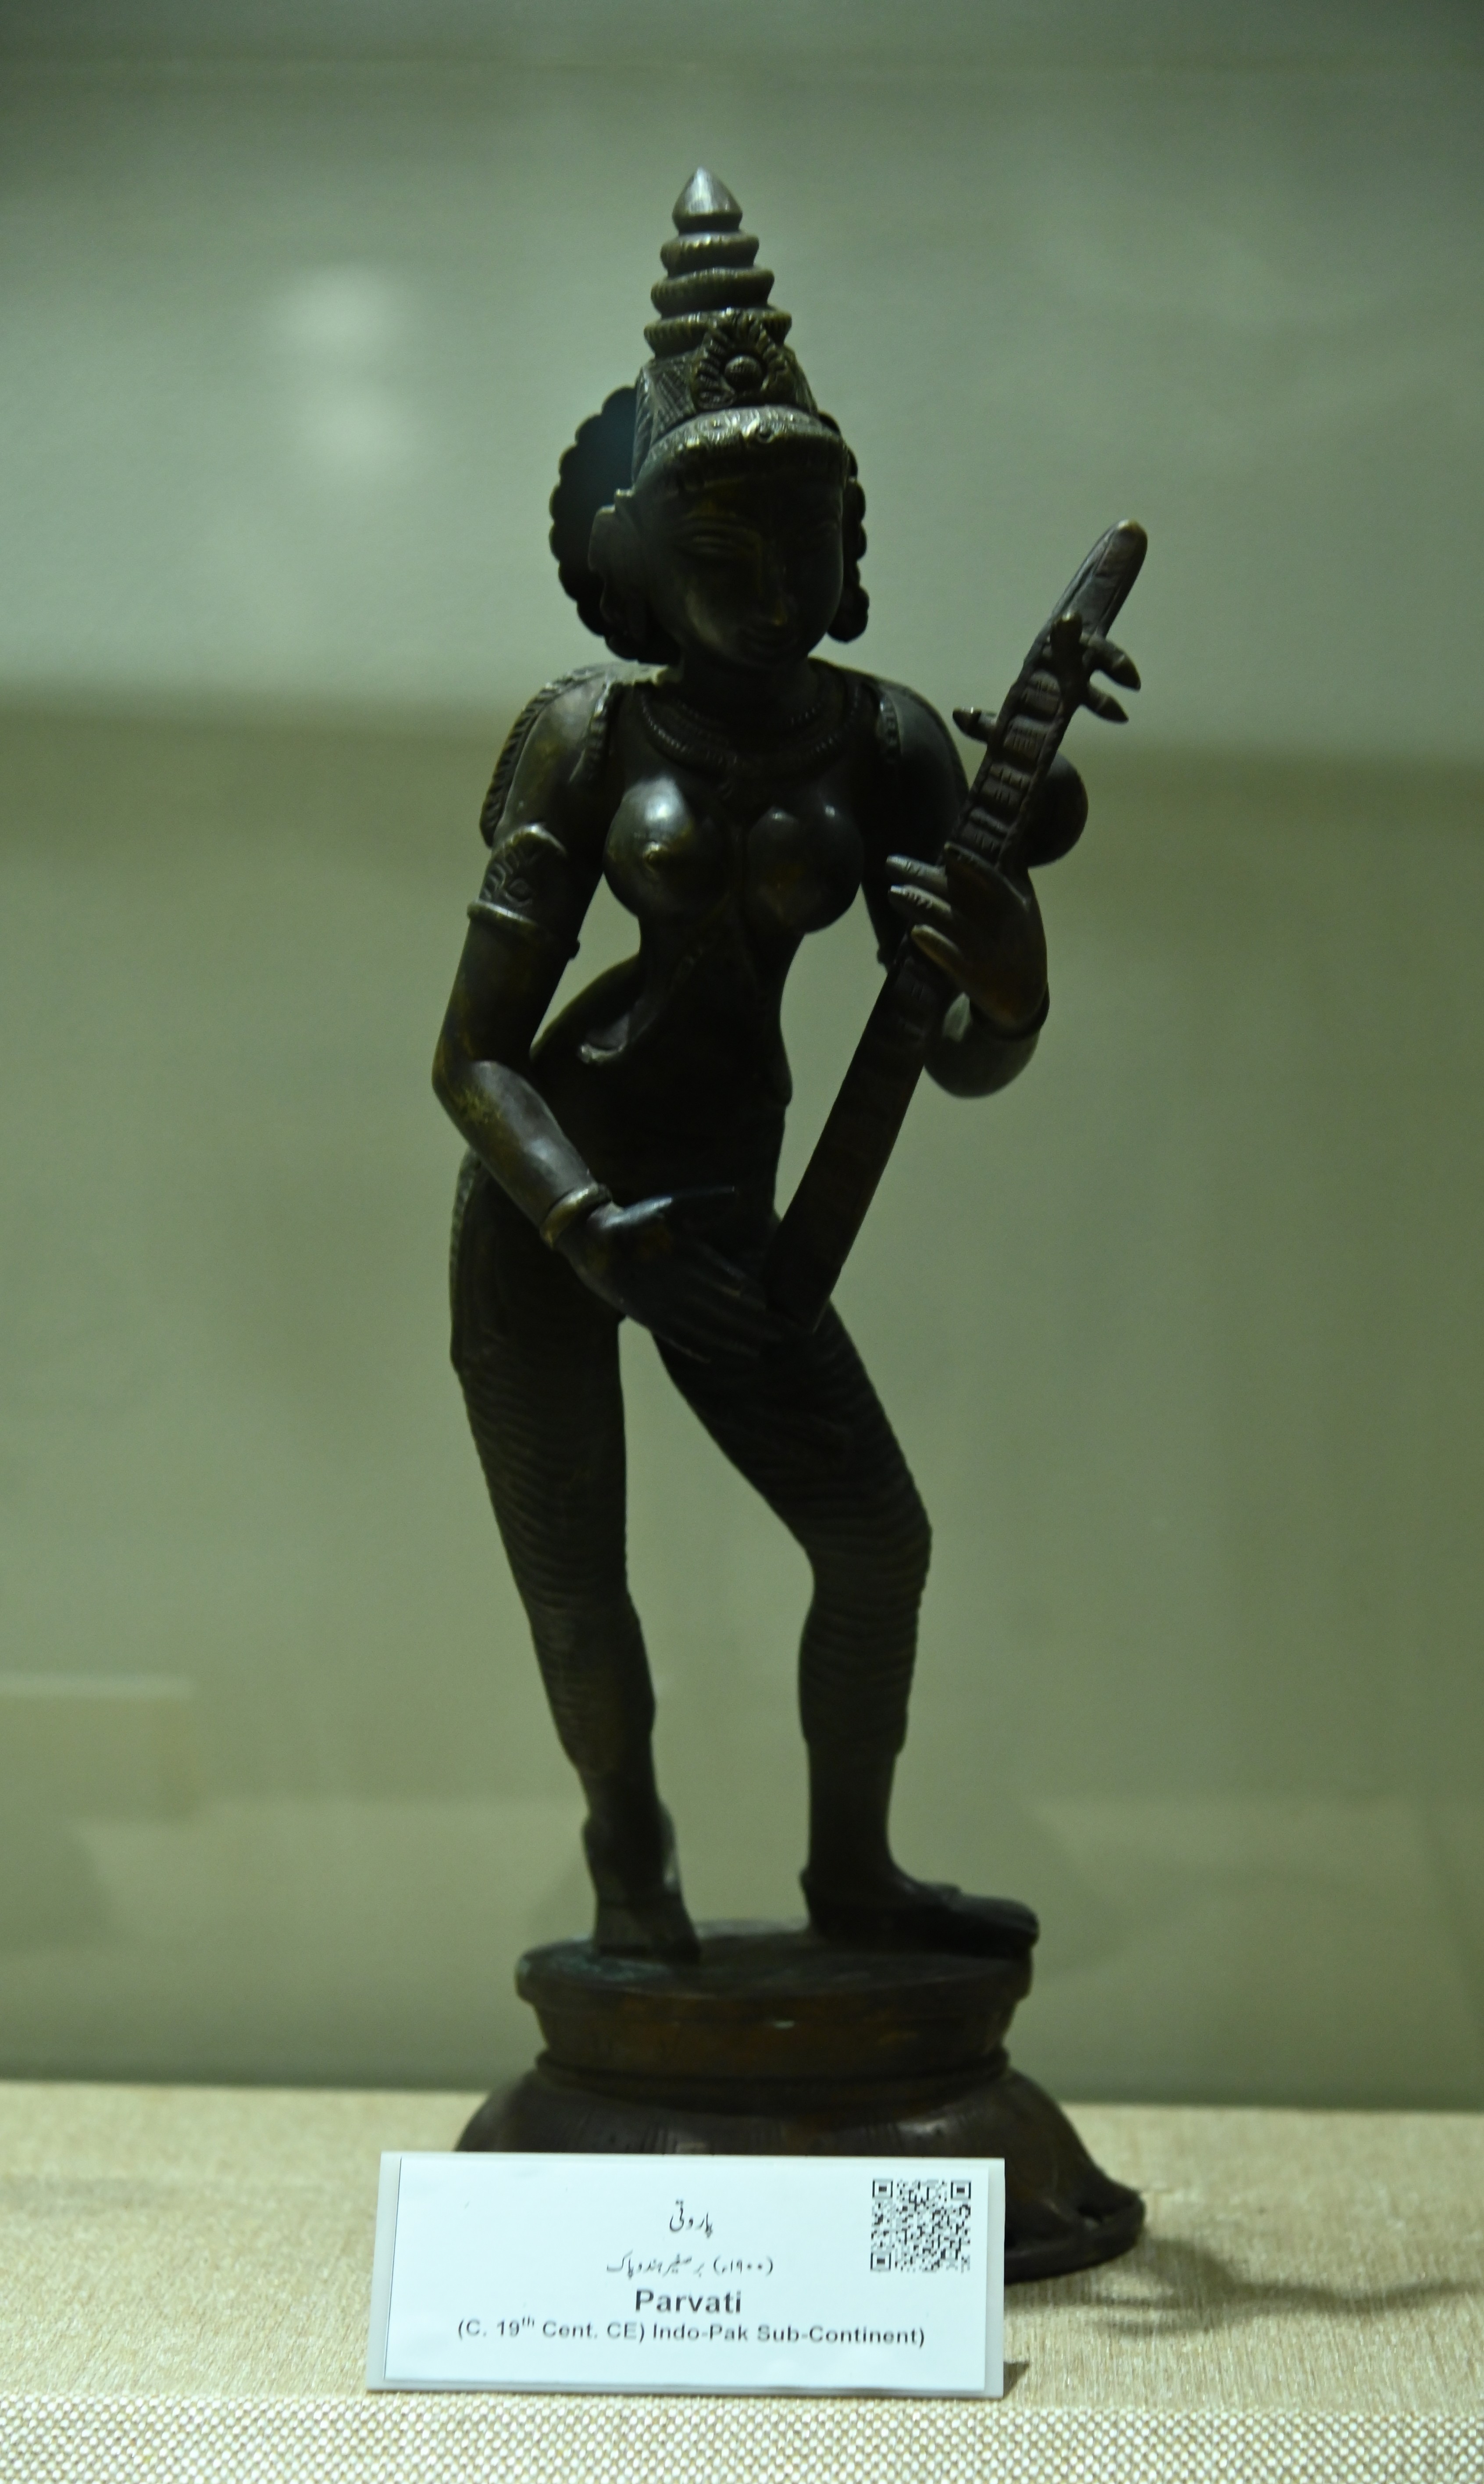 The statue of Parvati, The Hindu Goddess of power, energy, nourishment, harmony, love, beauty, devotion, and motherhood